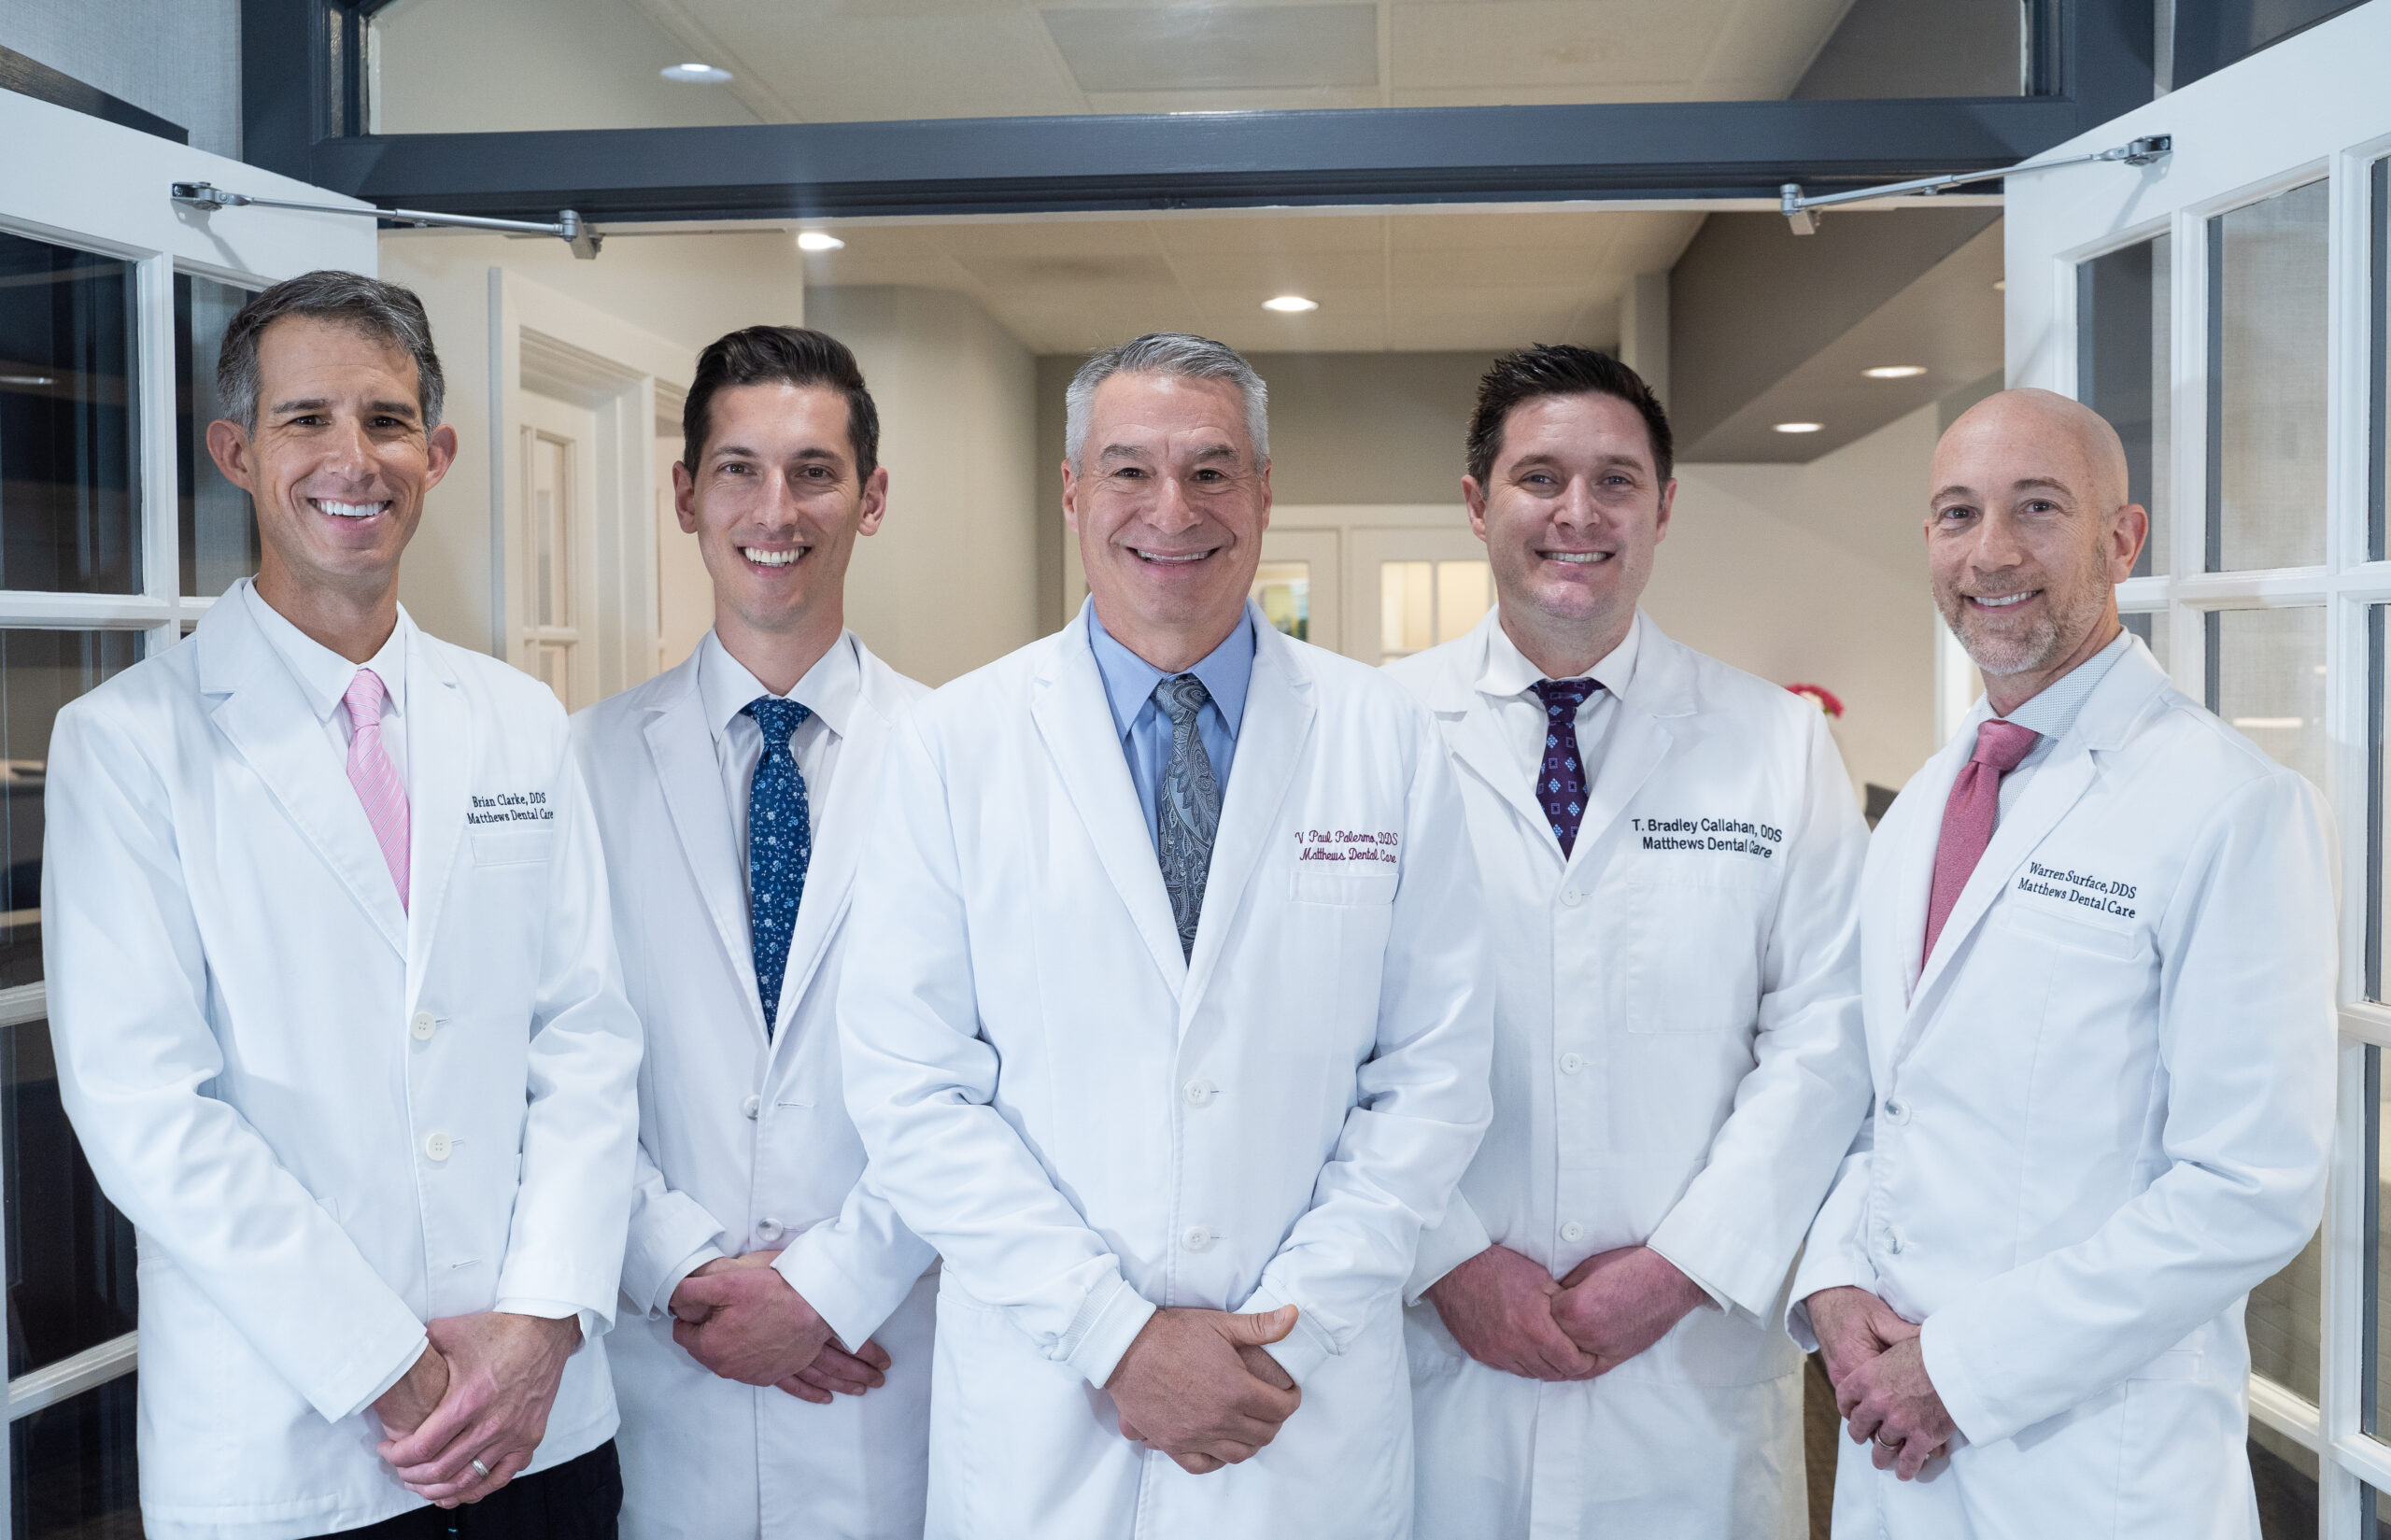 Doctors - Dr. Paul Palermo, Dr. Warren Surface, Dr. Brian Clarke, & Dr. Brad Callahan, T. Bradley Callahan, Gordon Averill